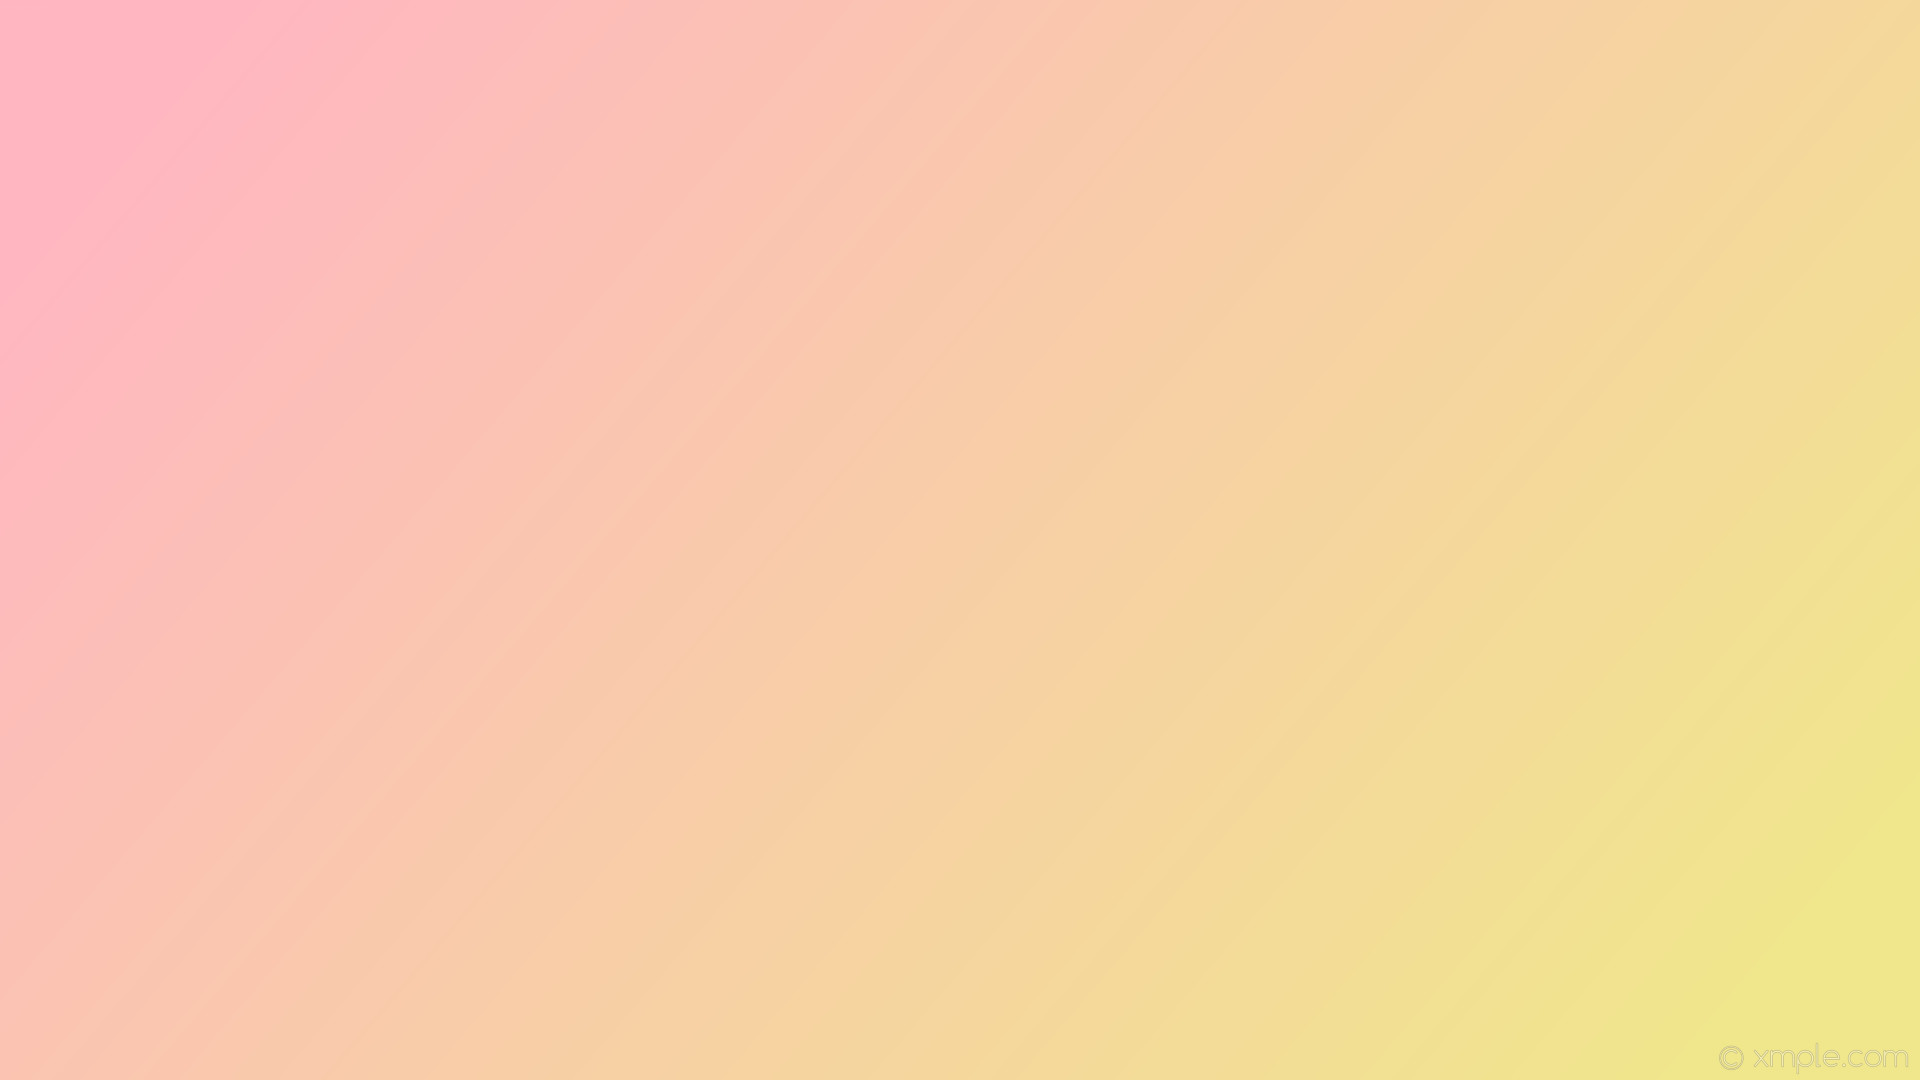 1920x1080 wallpaper linear yellow pink gradient khaki light pink #f0e68c #ffb6c1 345Â°